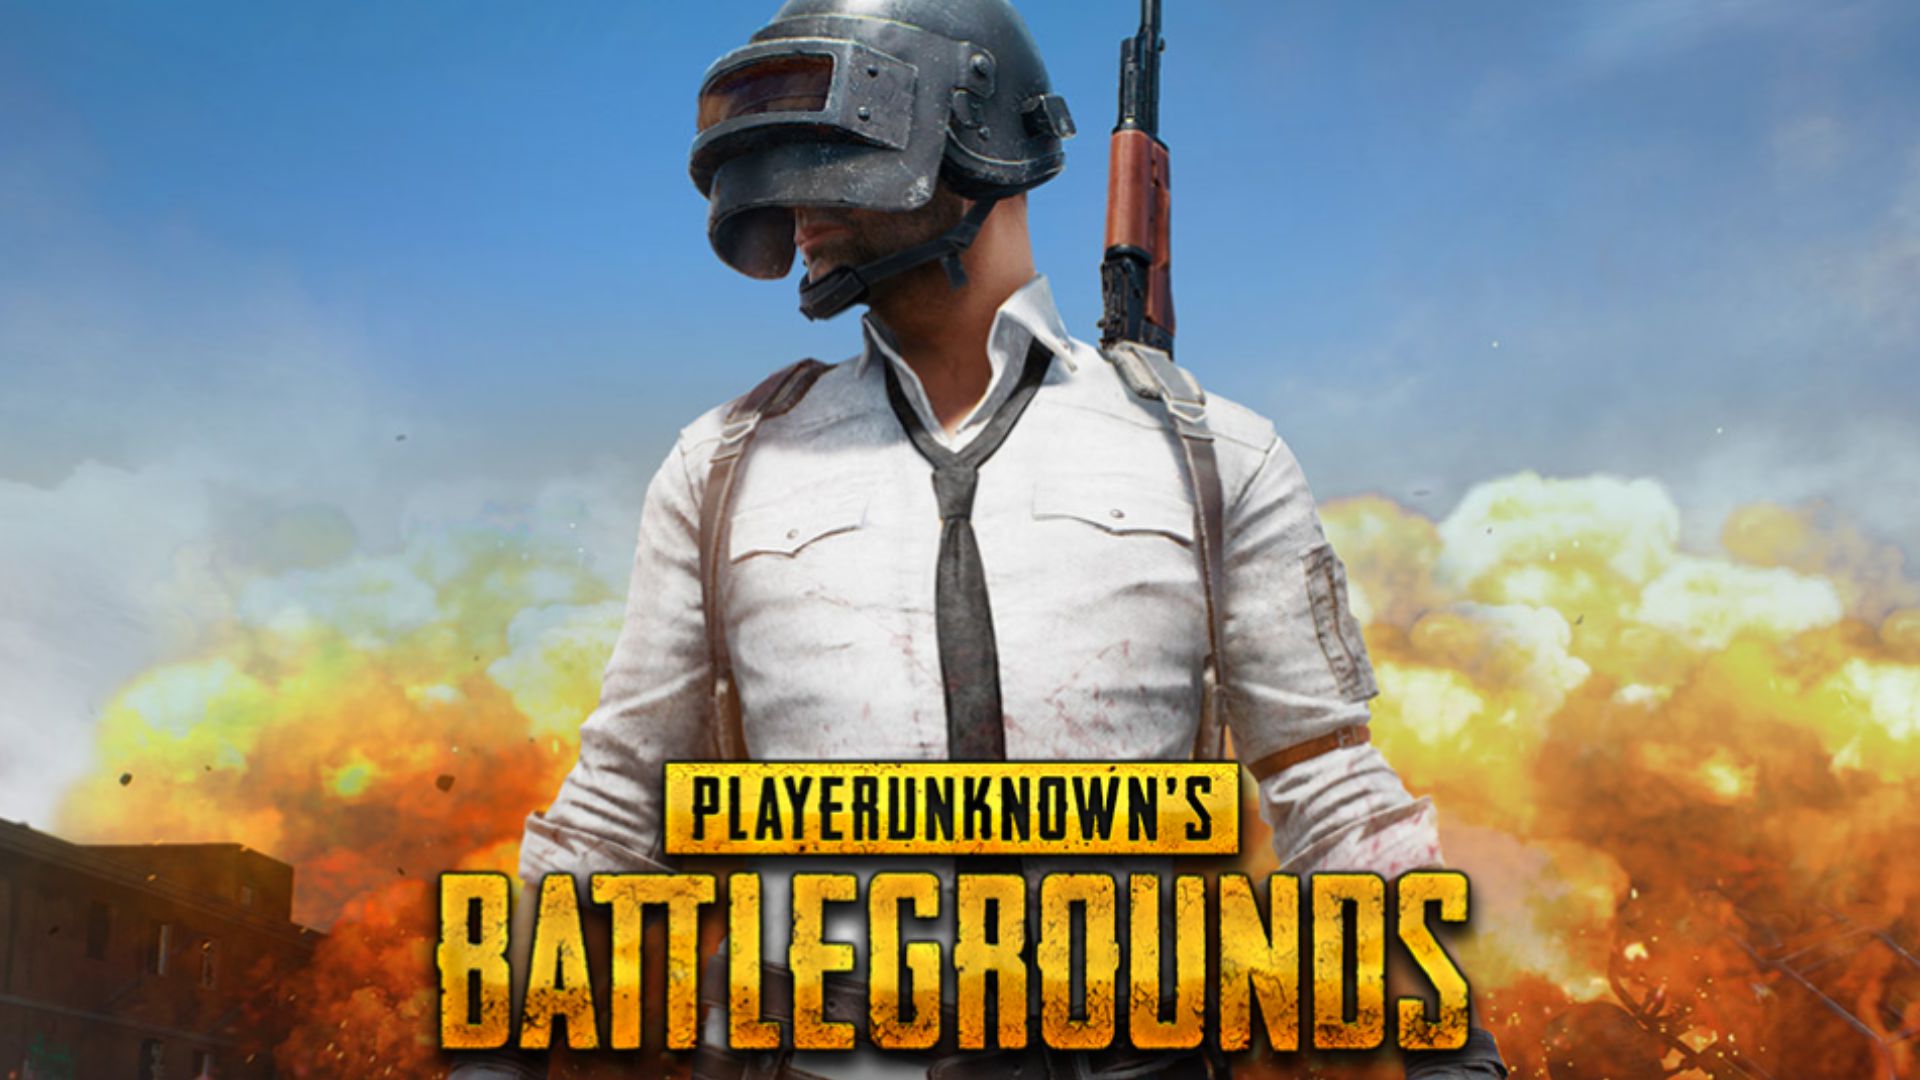 Playerunkown’s Battlegrounds para mobile já contém trapaças